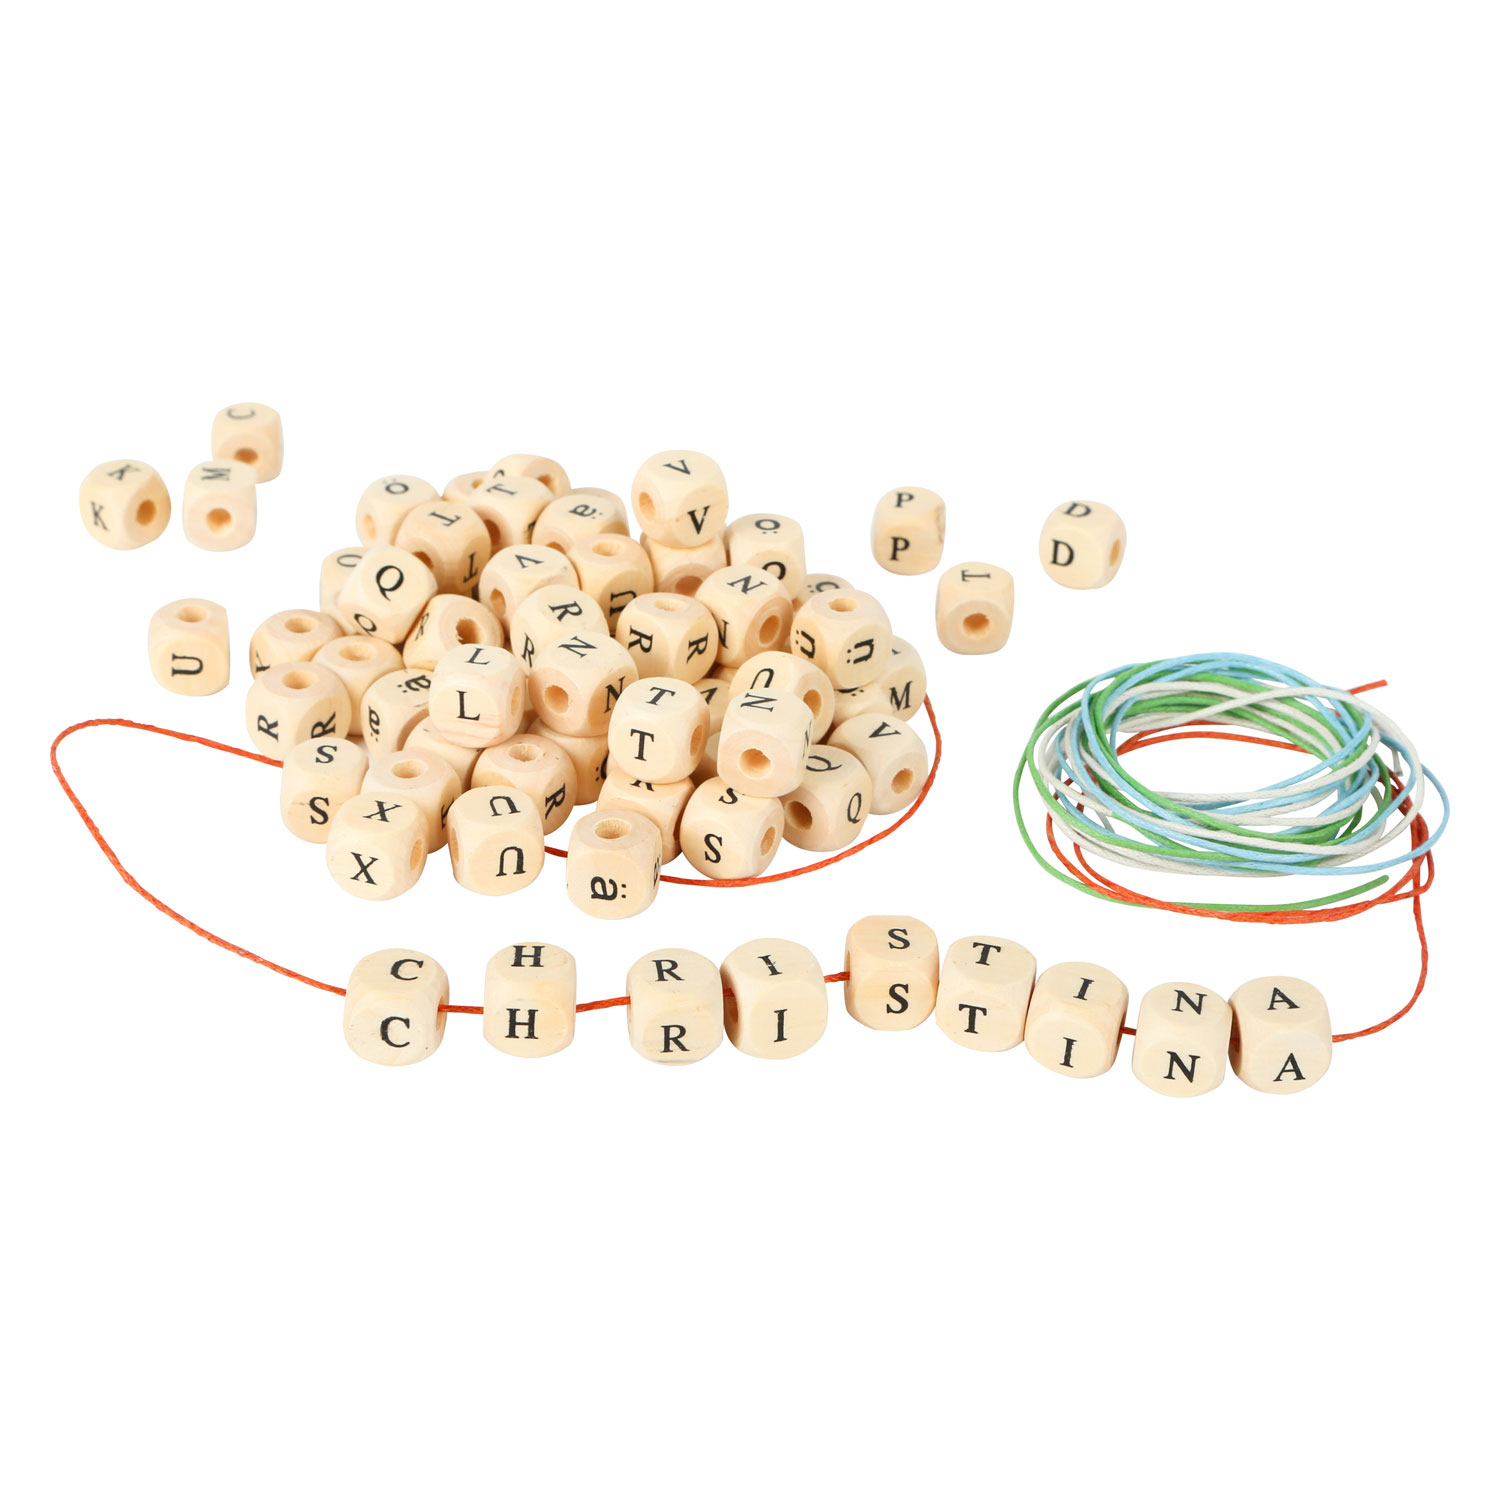 Small Foot - Fabrication de colliers de lettres en bois, 300 perles